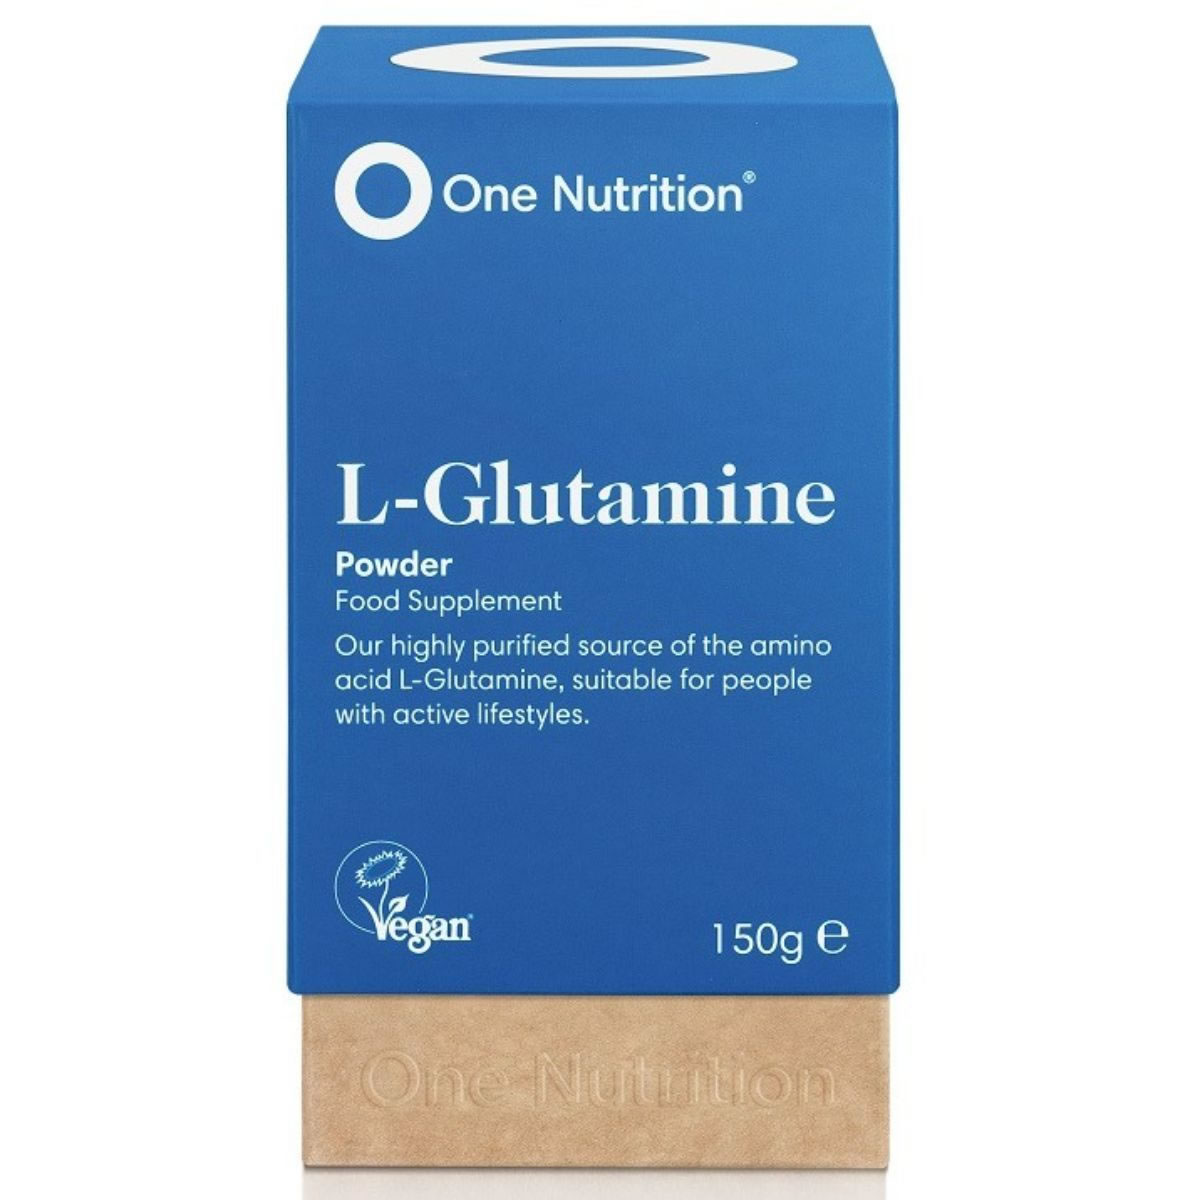 One Nutrition, L-Glutamine Powder, 150g